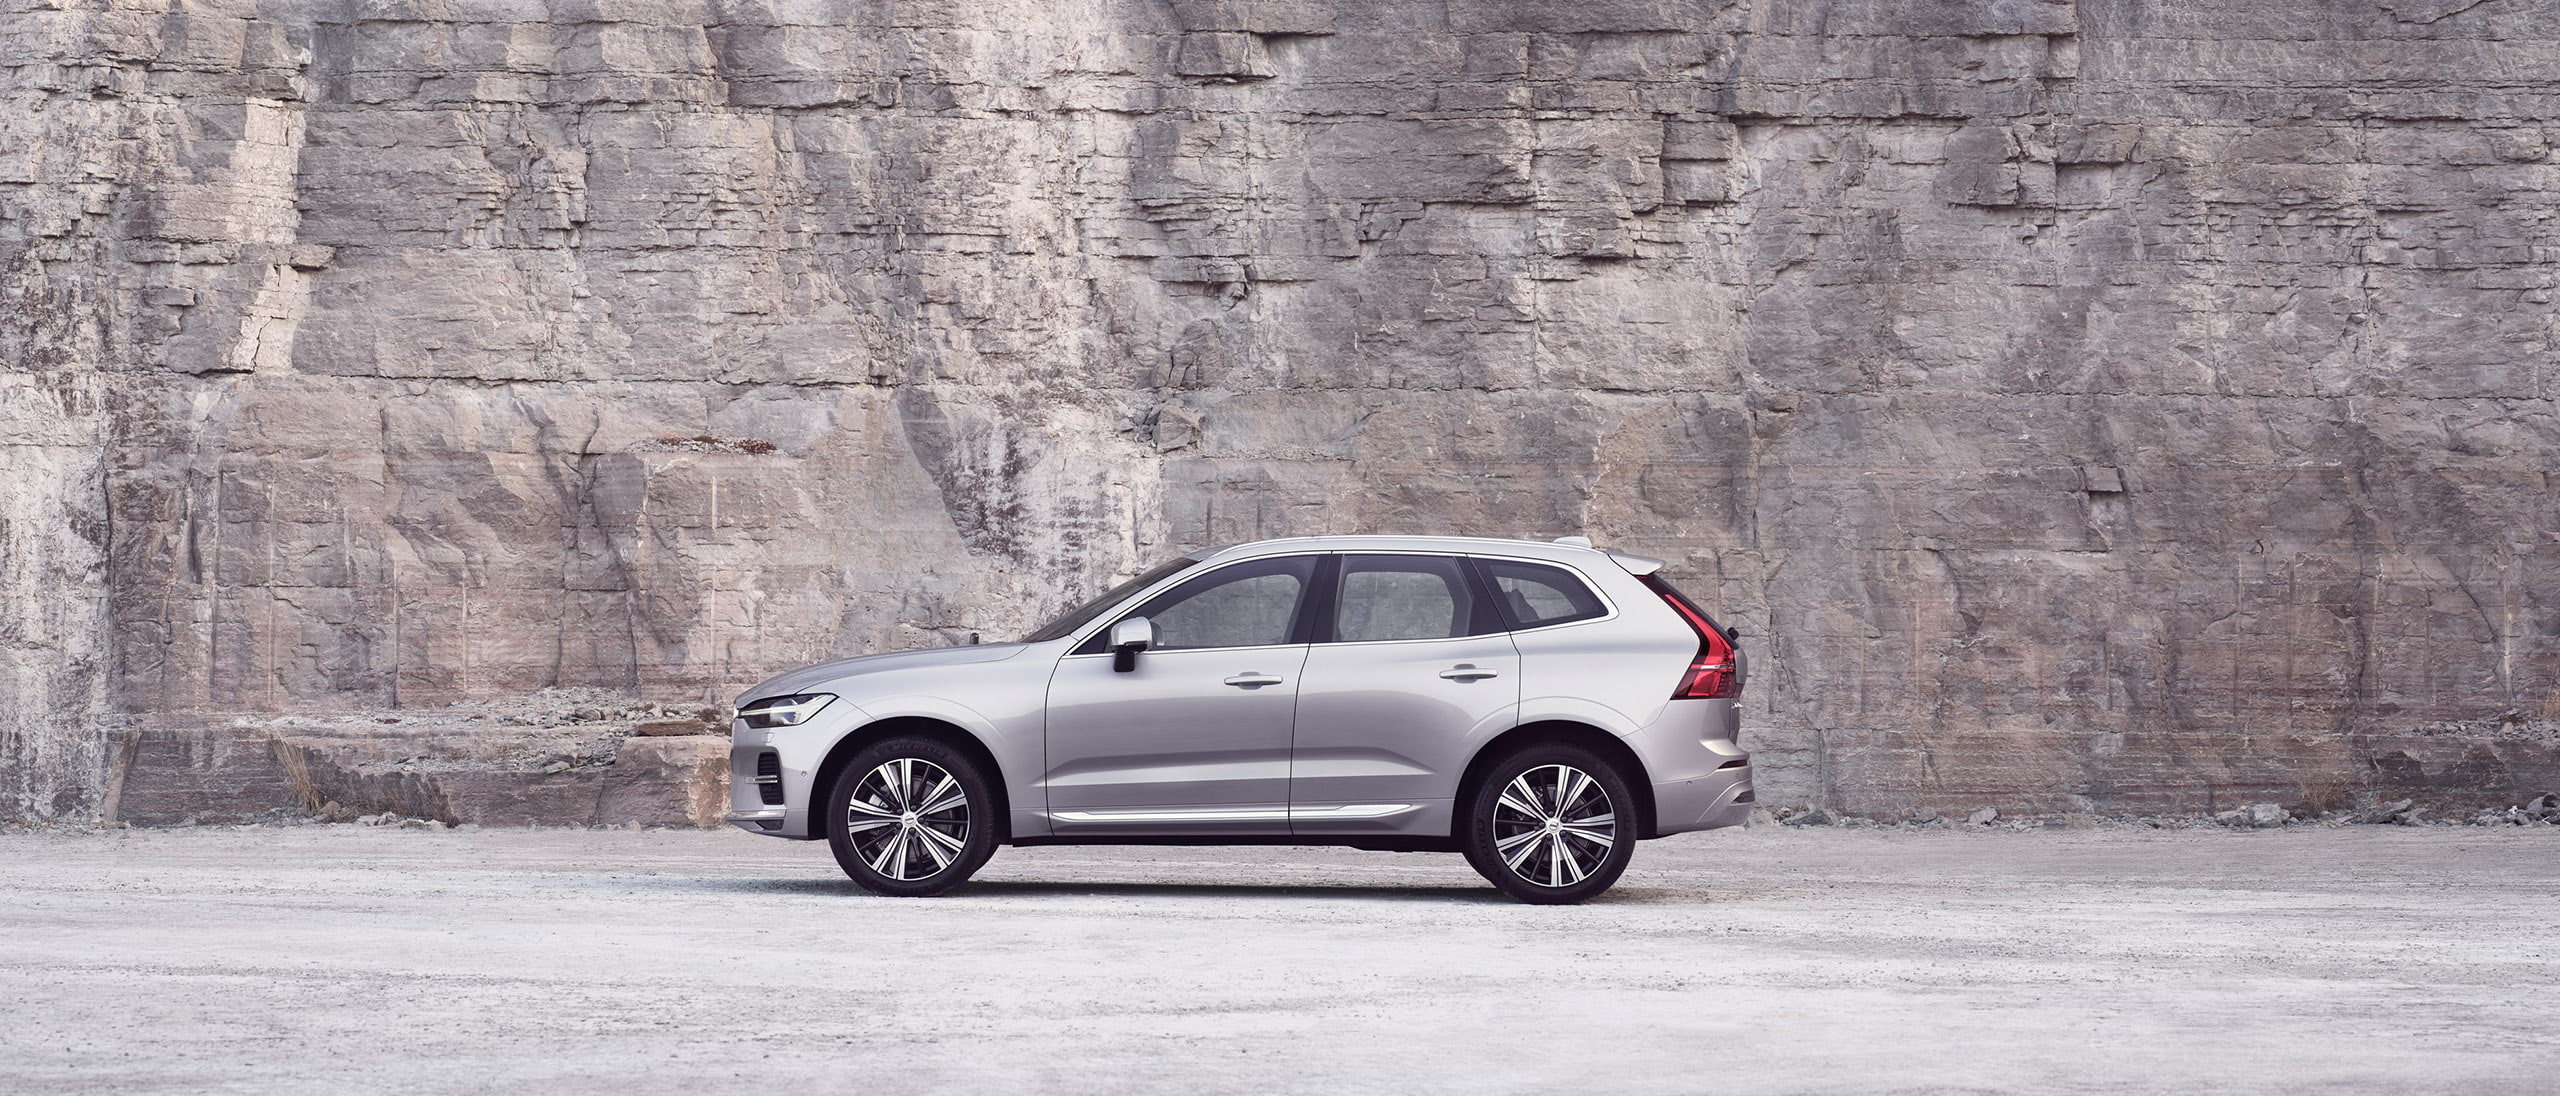 Сребрен Volvo XC60 стои неподвижно пред карпест ѕид.